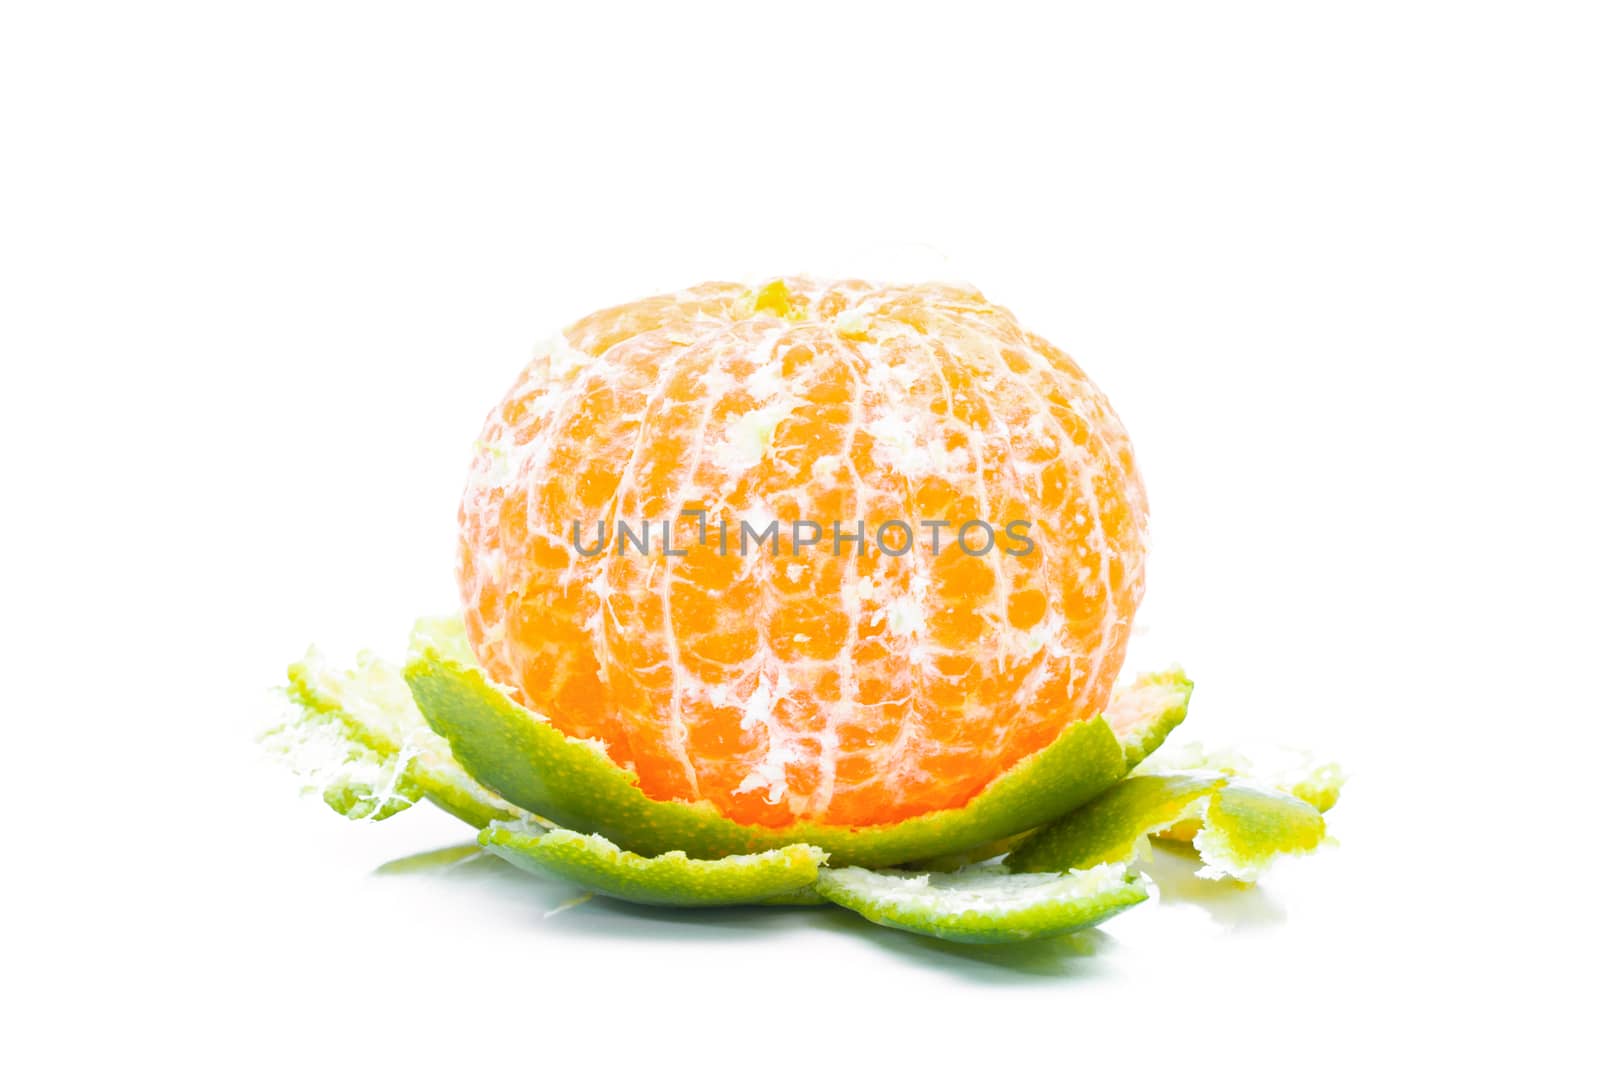 Shogun oranges fruit on a white background by sompongtom